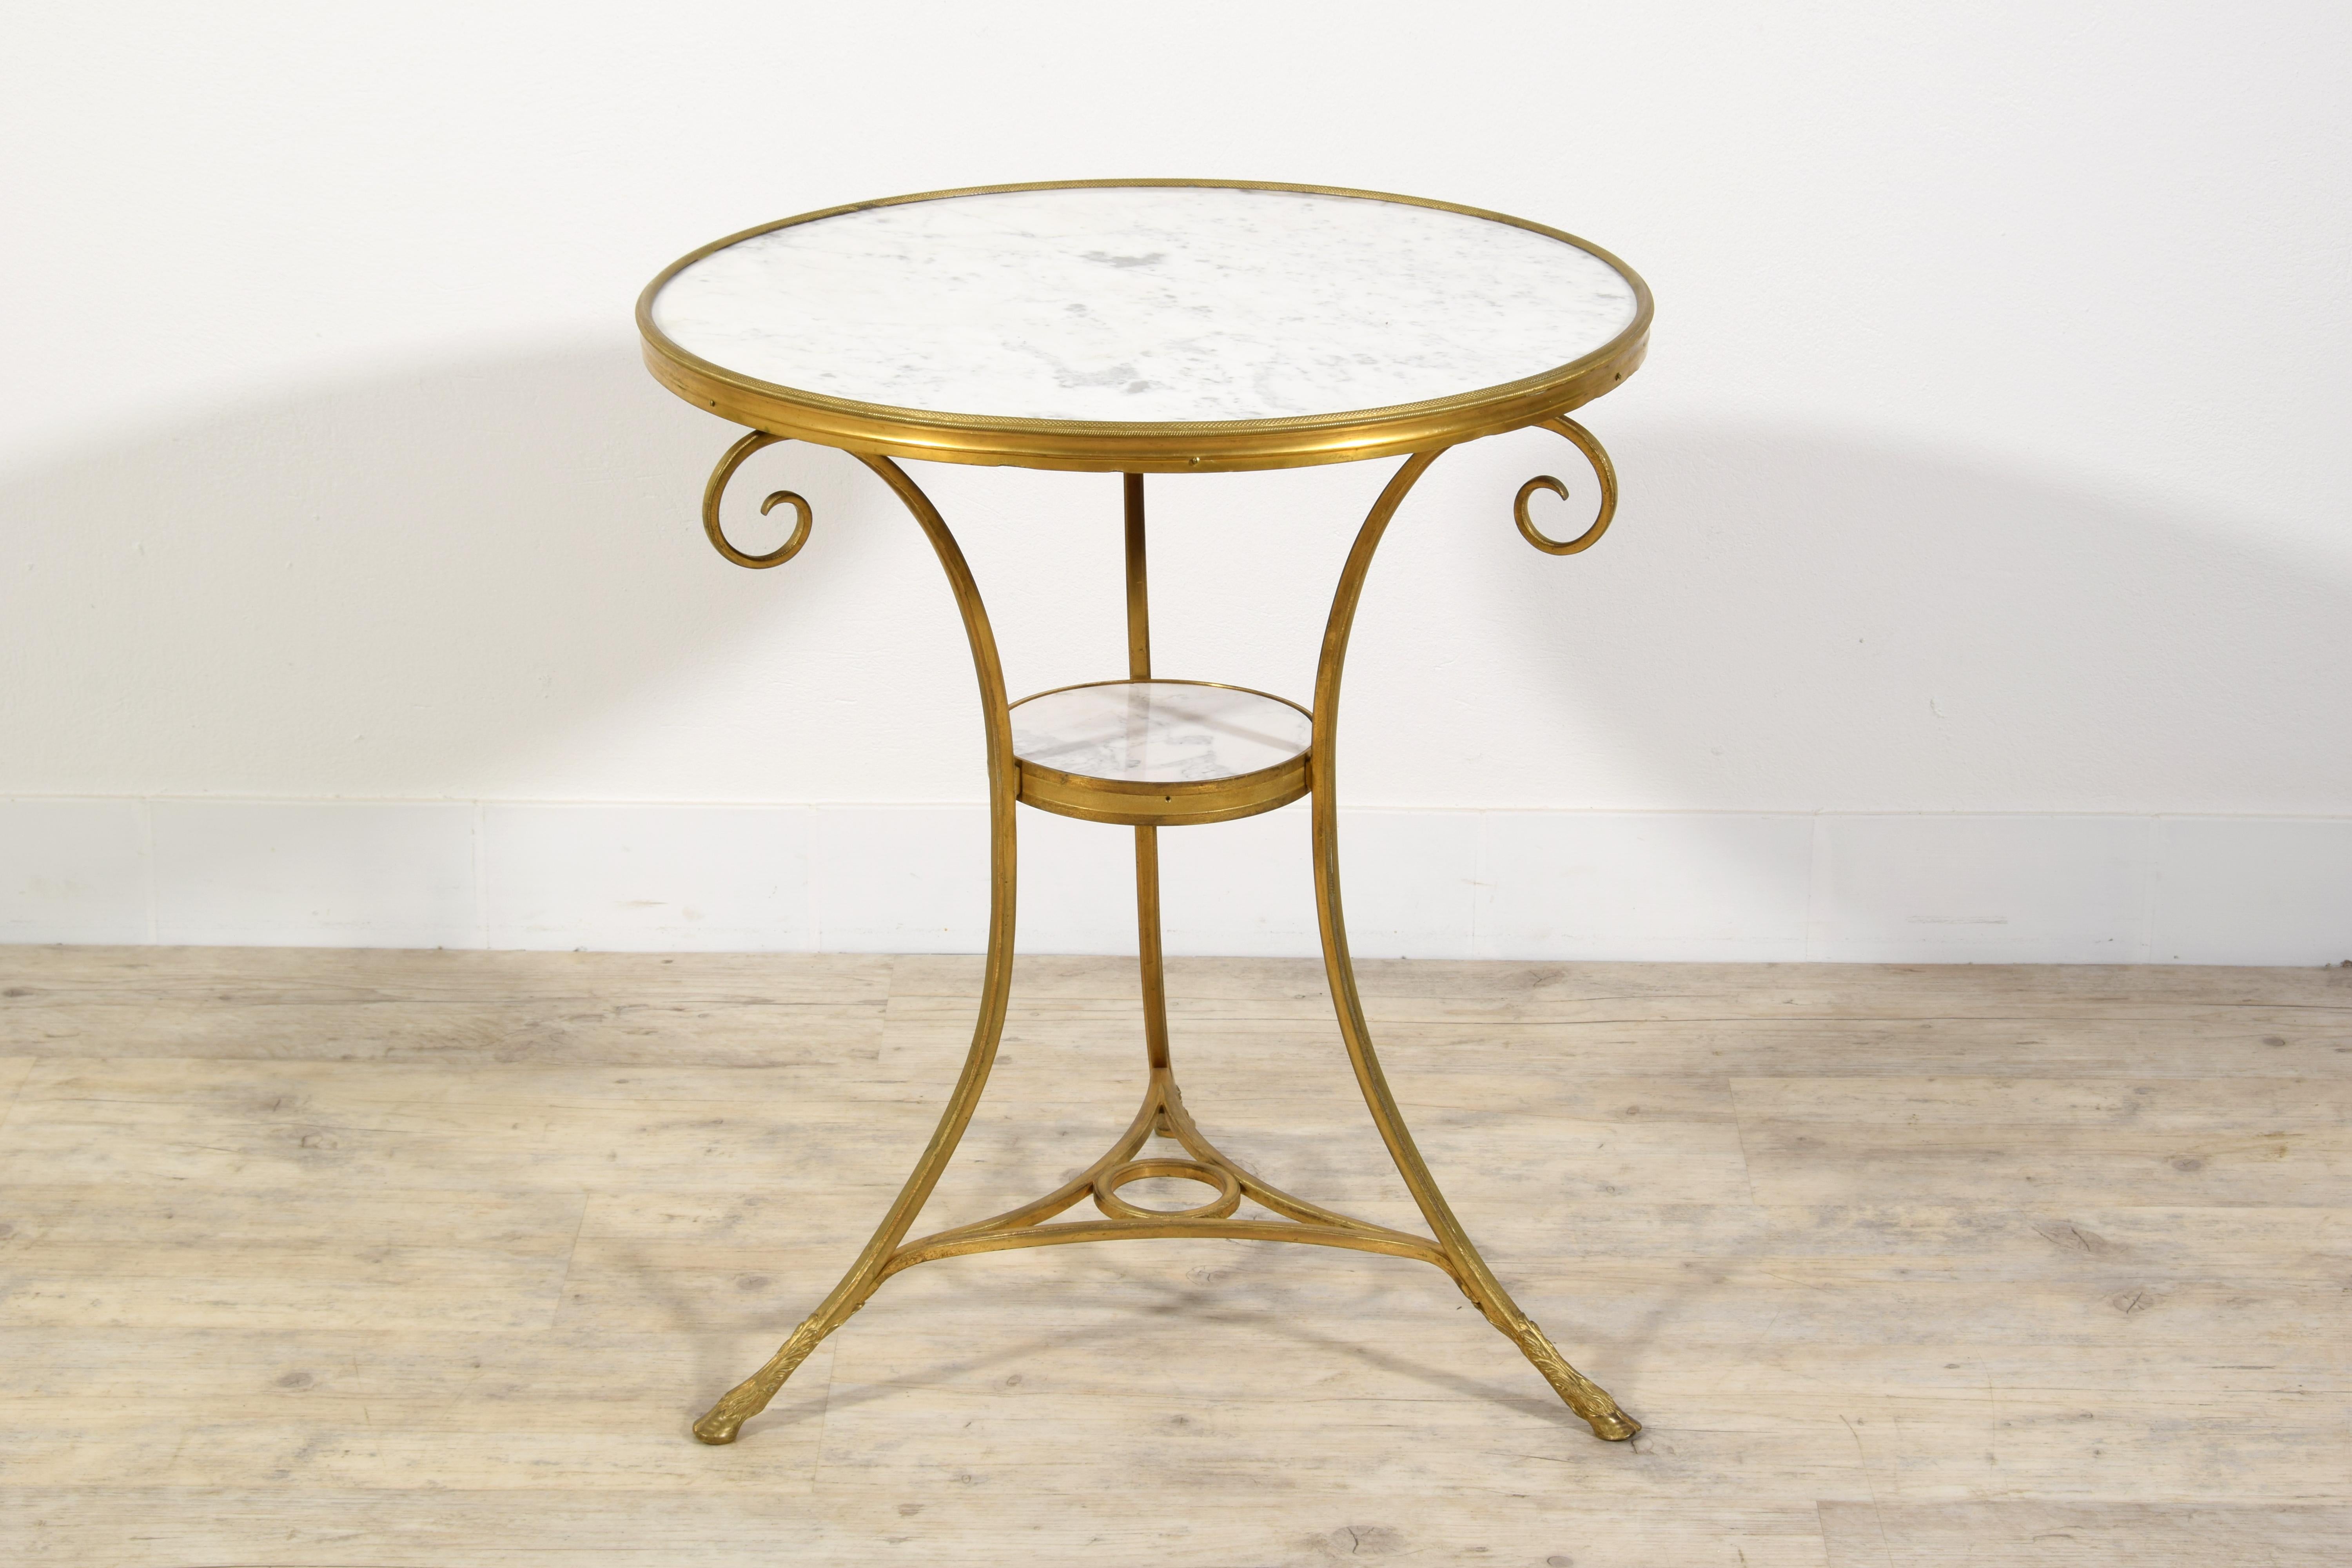 19th Century, Louis XVI Style French Gilt Bronze Tripod Coffee Table or Guéridon For Sale 1